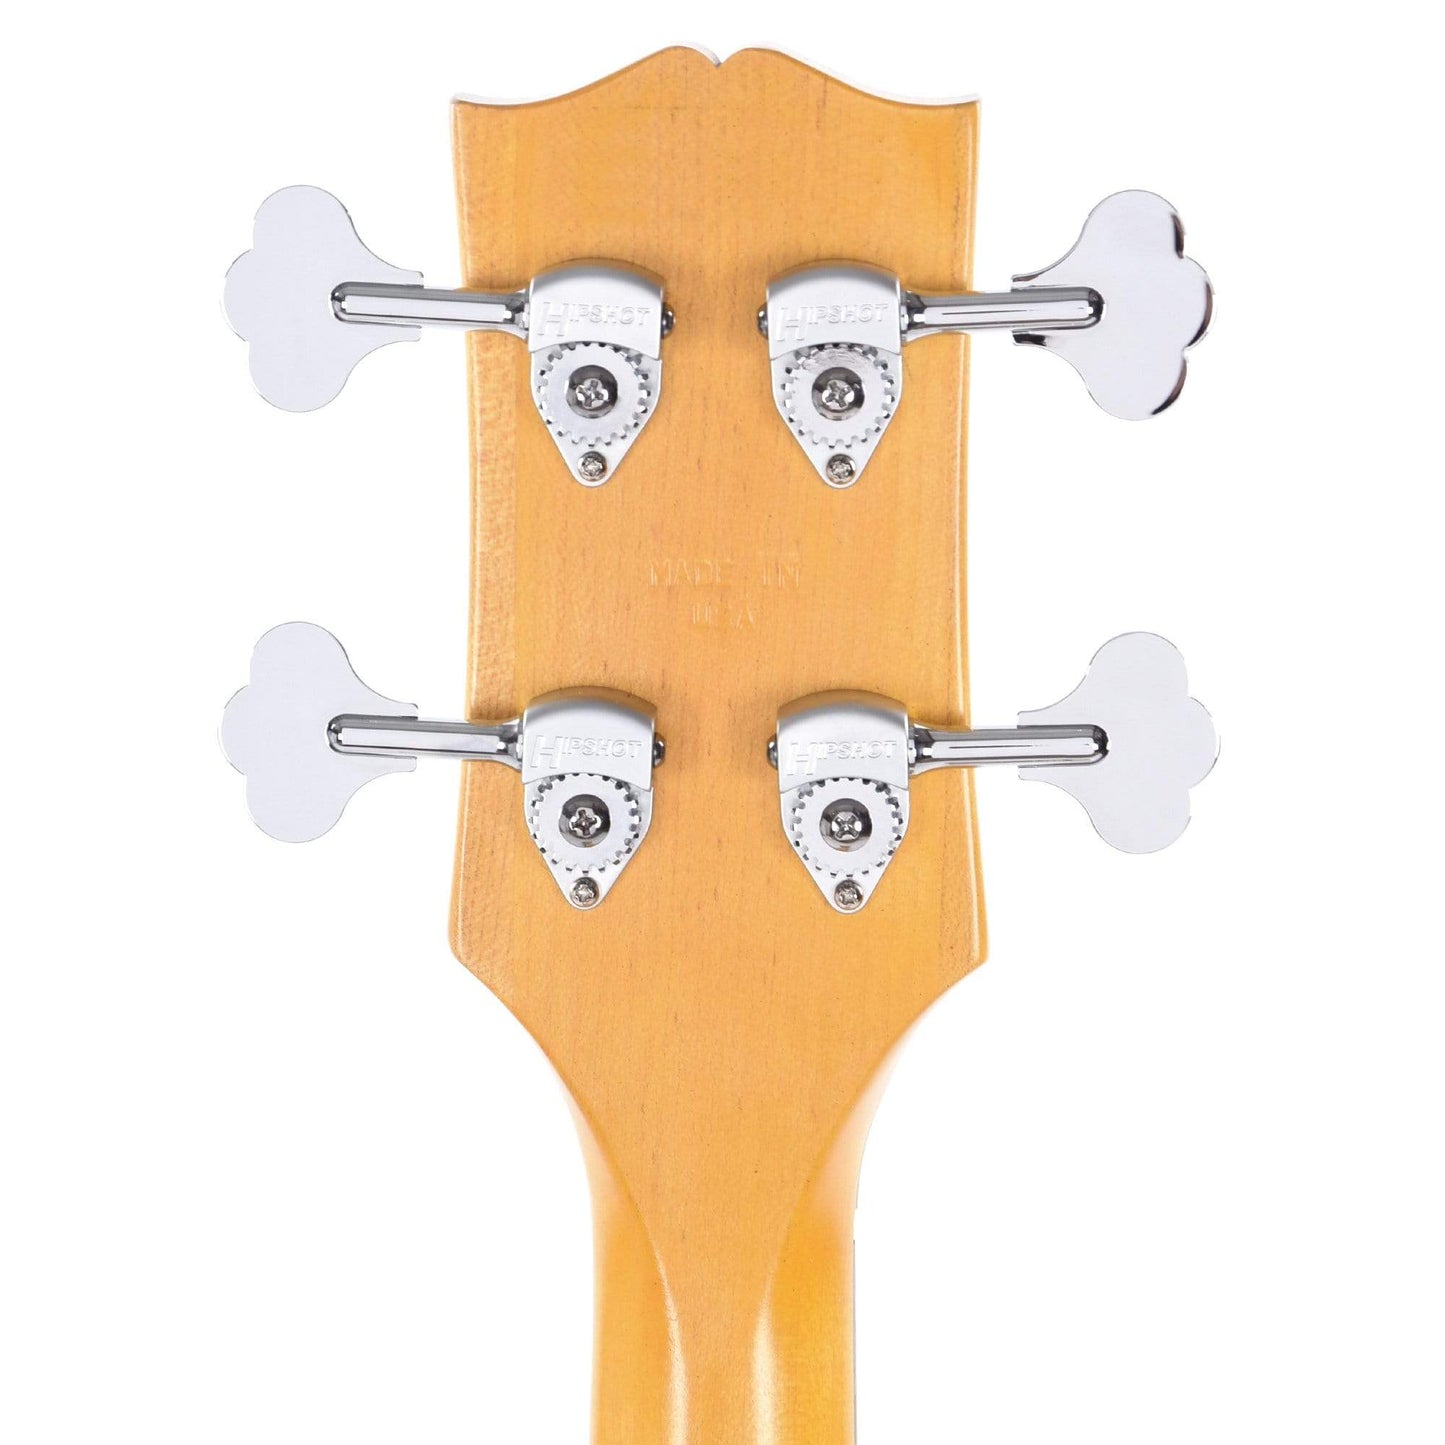 Gibson USA Les Paul Junior DC Bass Worn TV Yellow w/Tortoise Pickguard & Chrome Cover Bass Guitars / 4-String